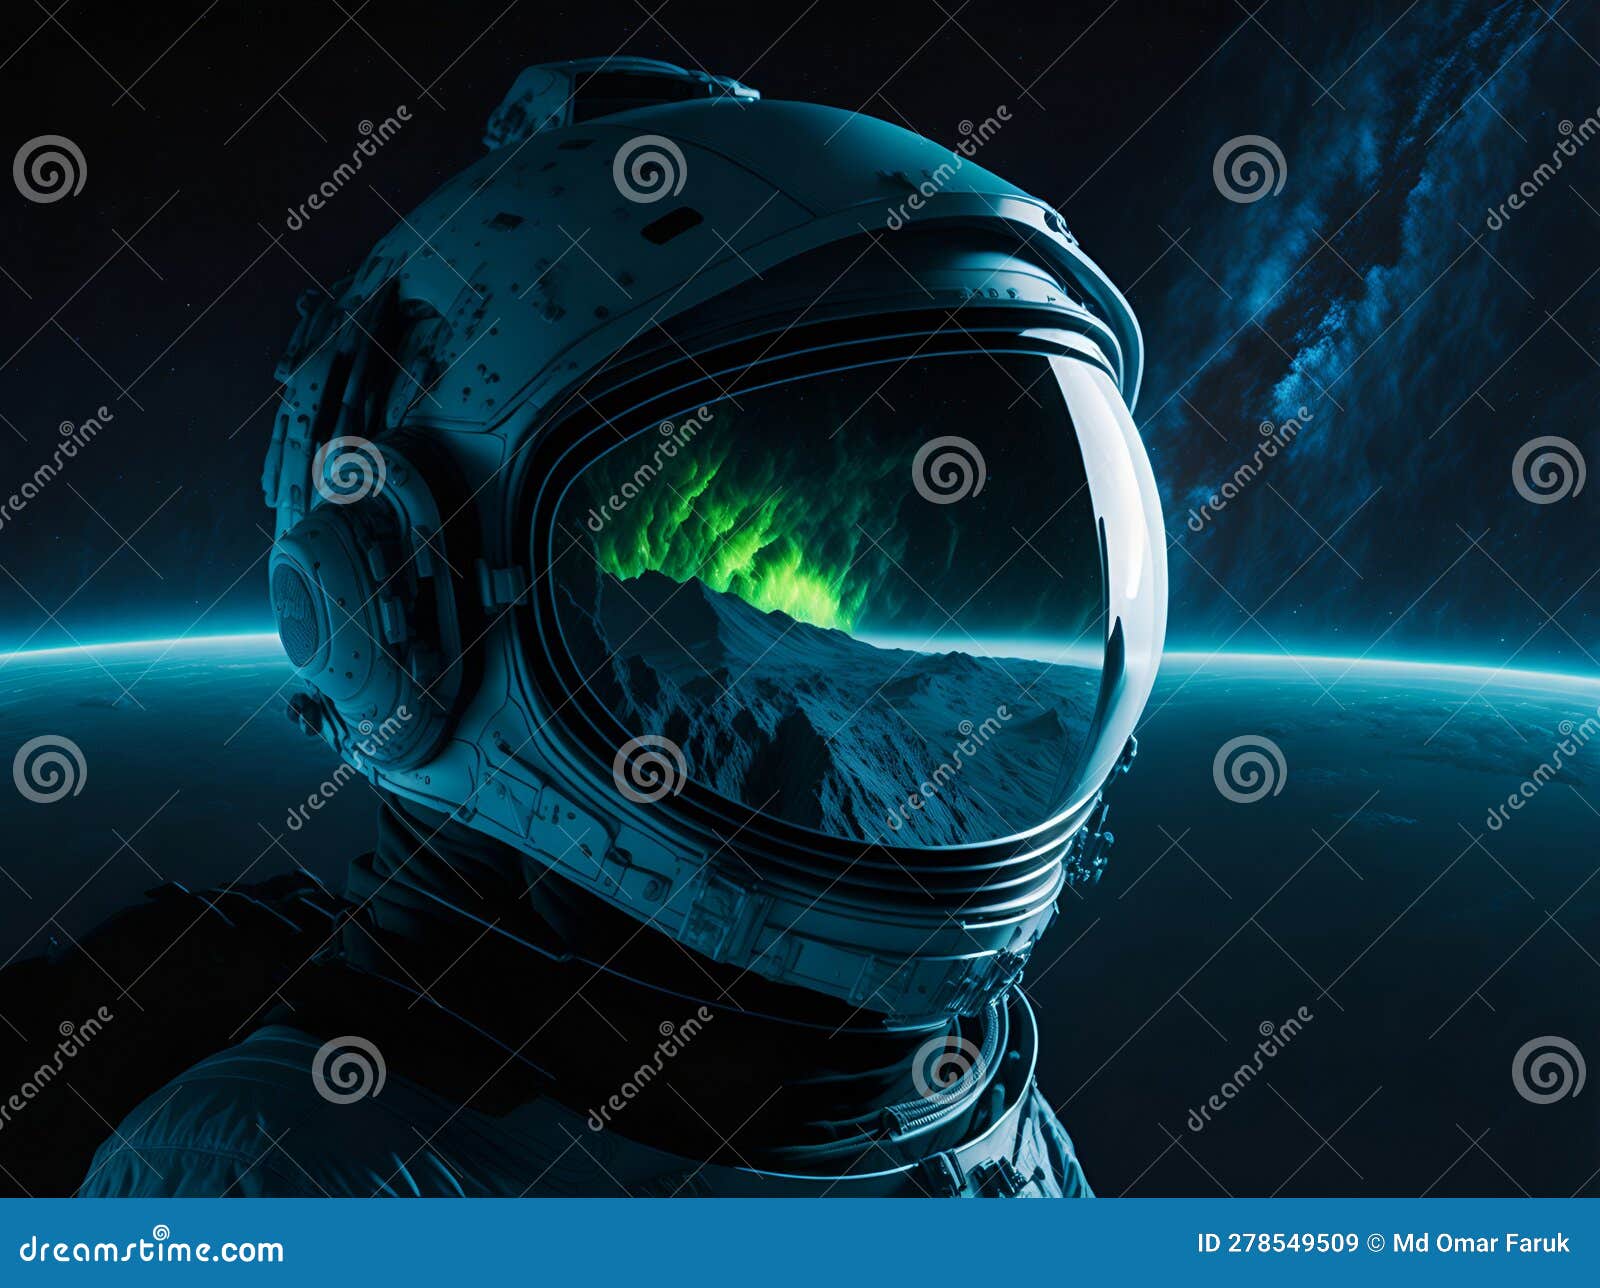 space adventure with an astronautâs helmet mirror.